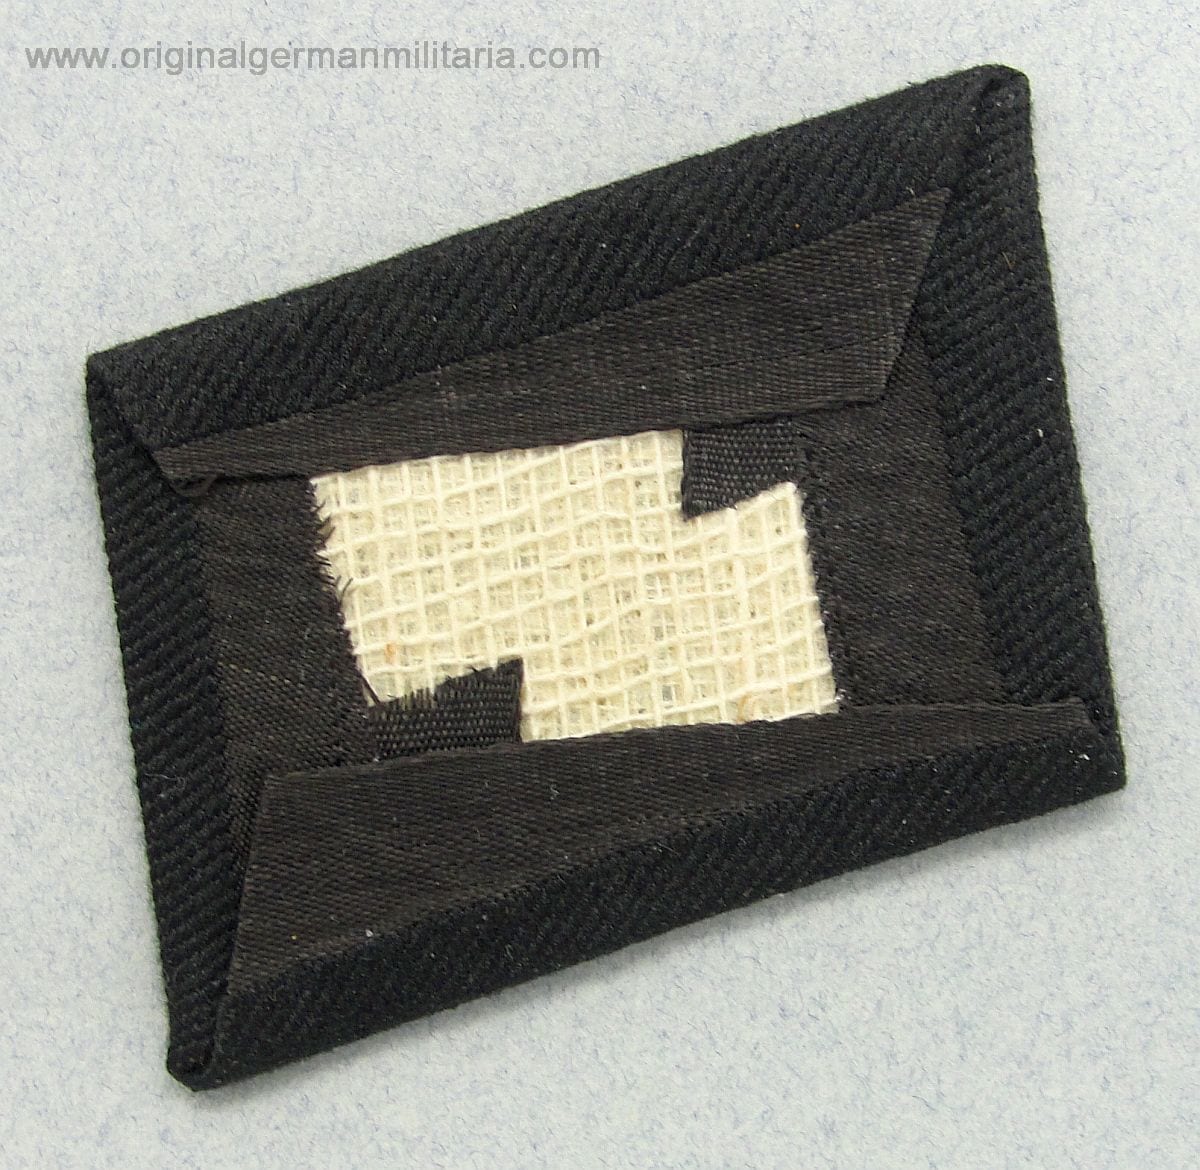 Bevo SS EM/NCO's Collar Tab